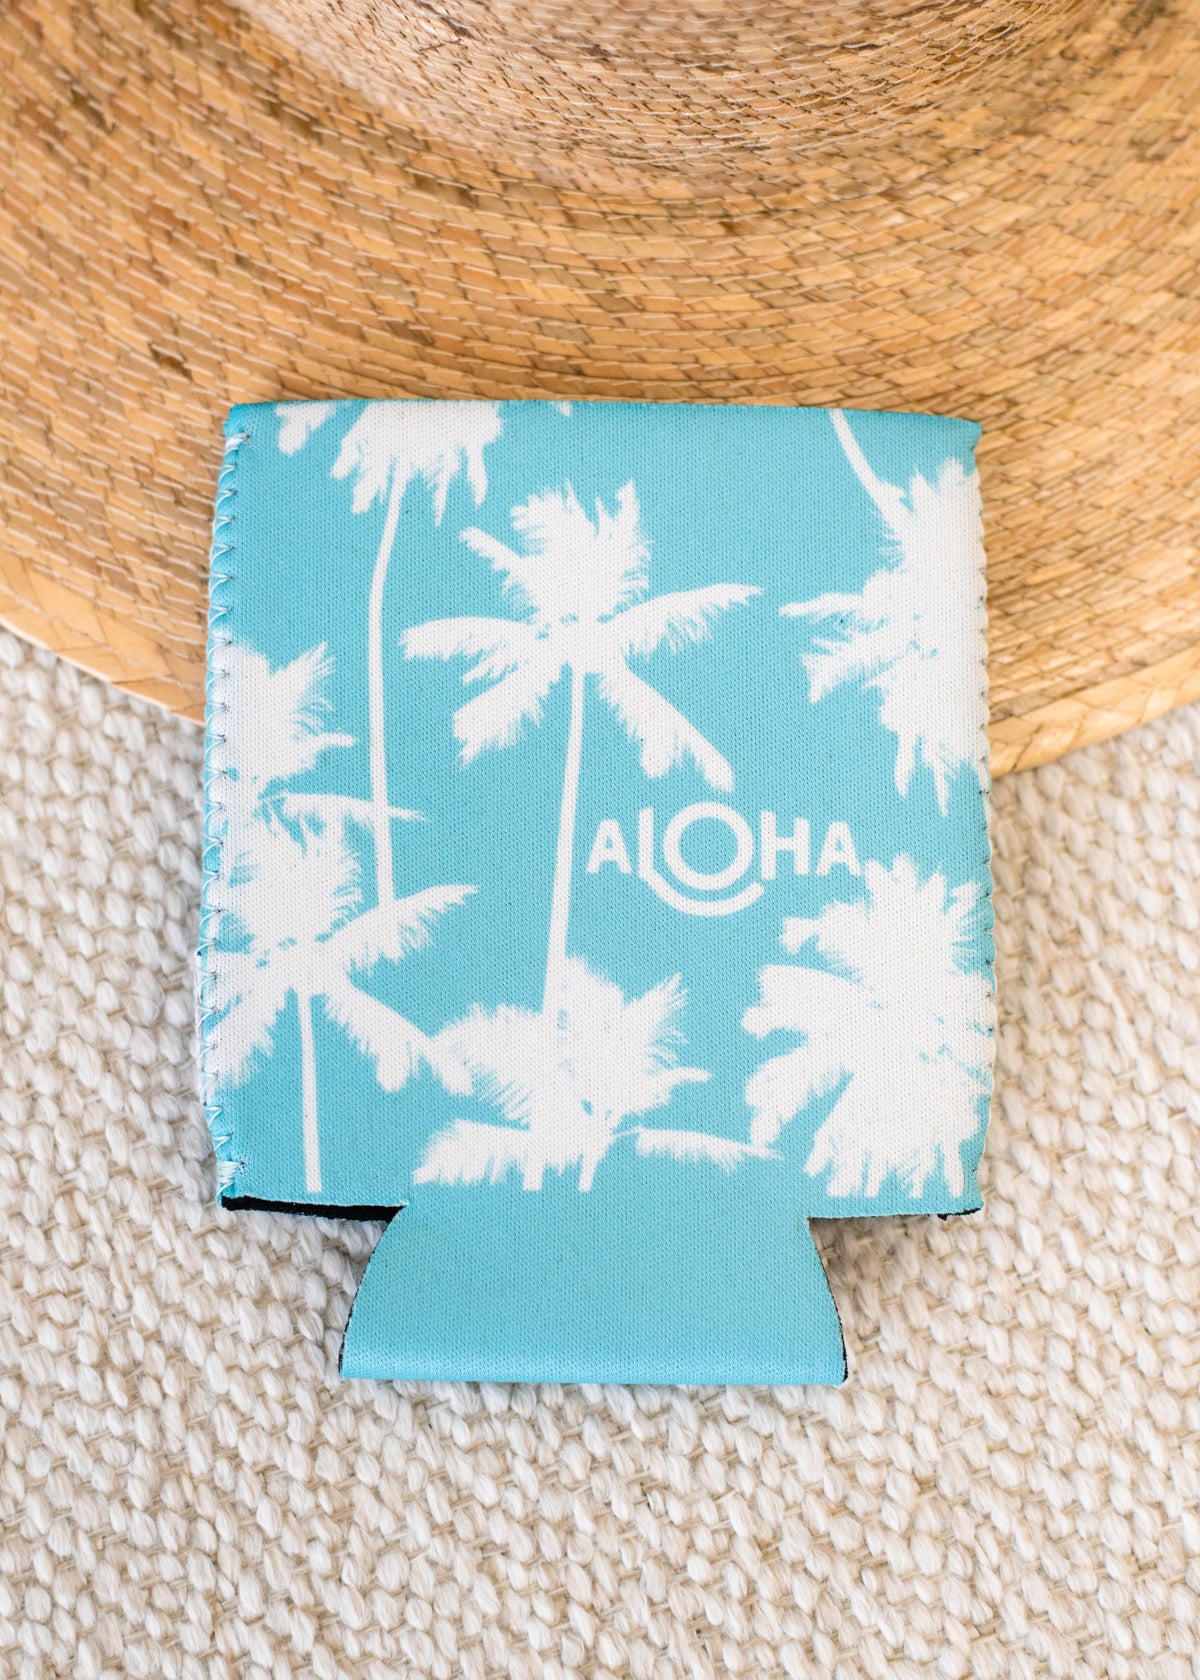 The Aloha Coldie